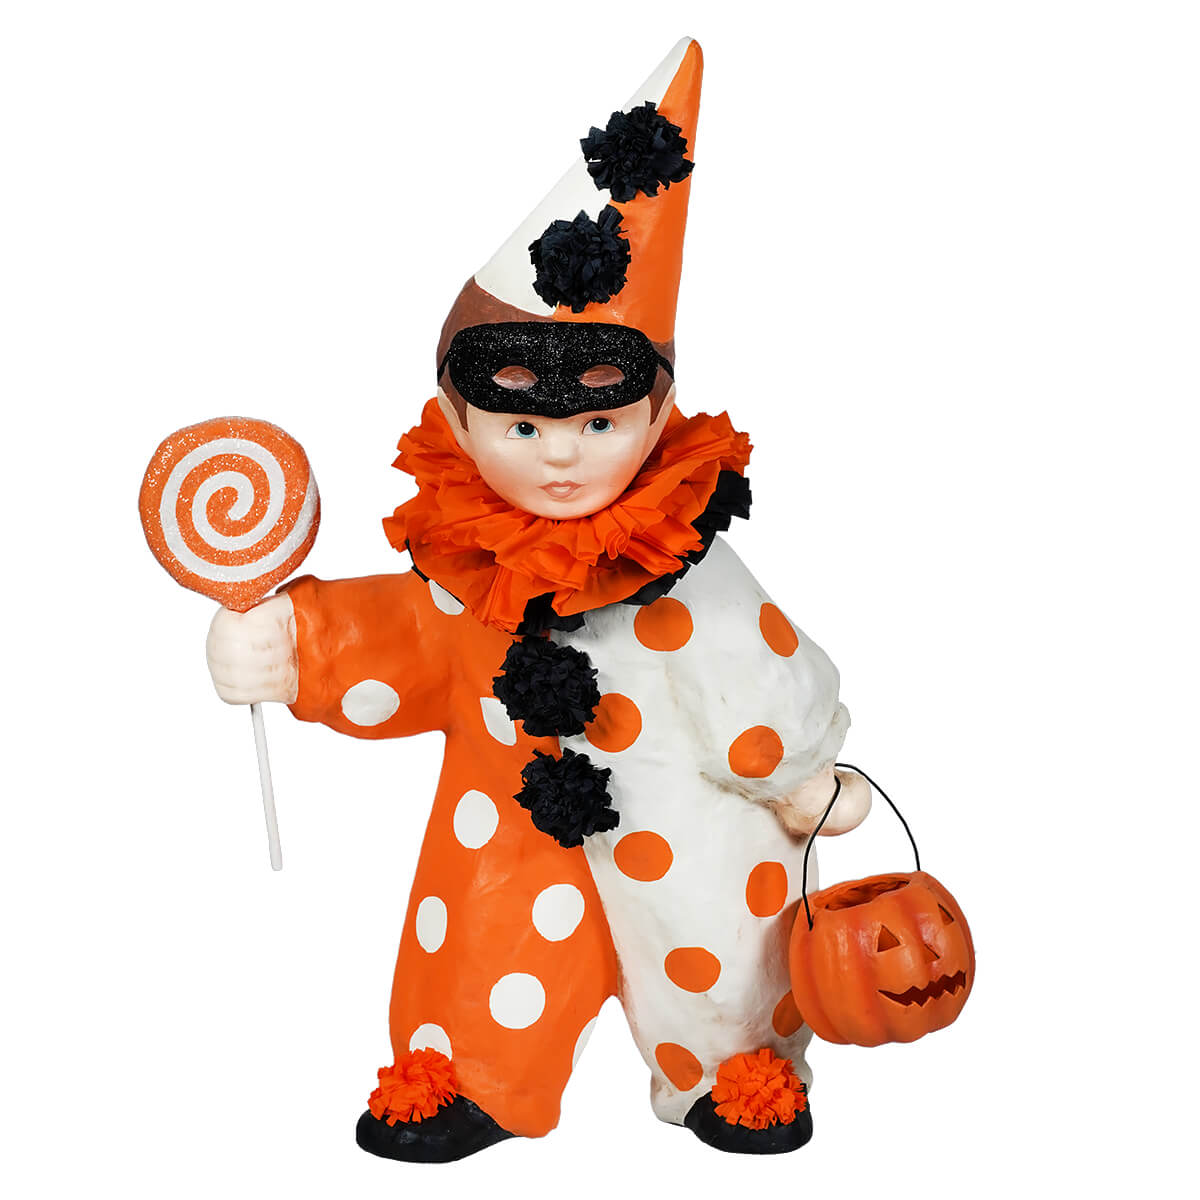 Joyful boy in vampire costume carving pumpkin, Halloween masquerade,  entertain, Stock image